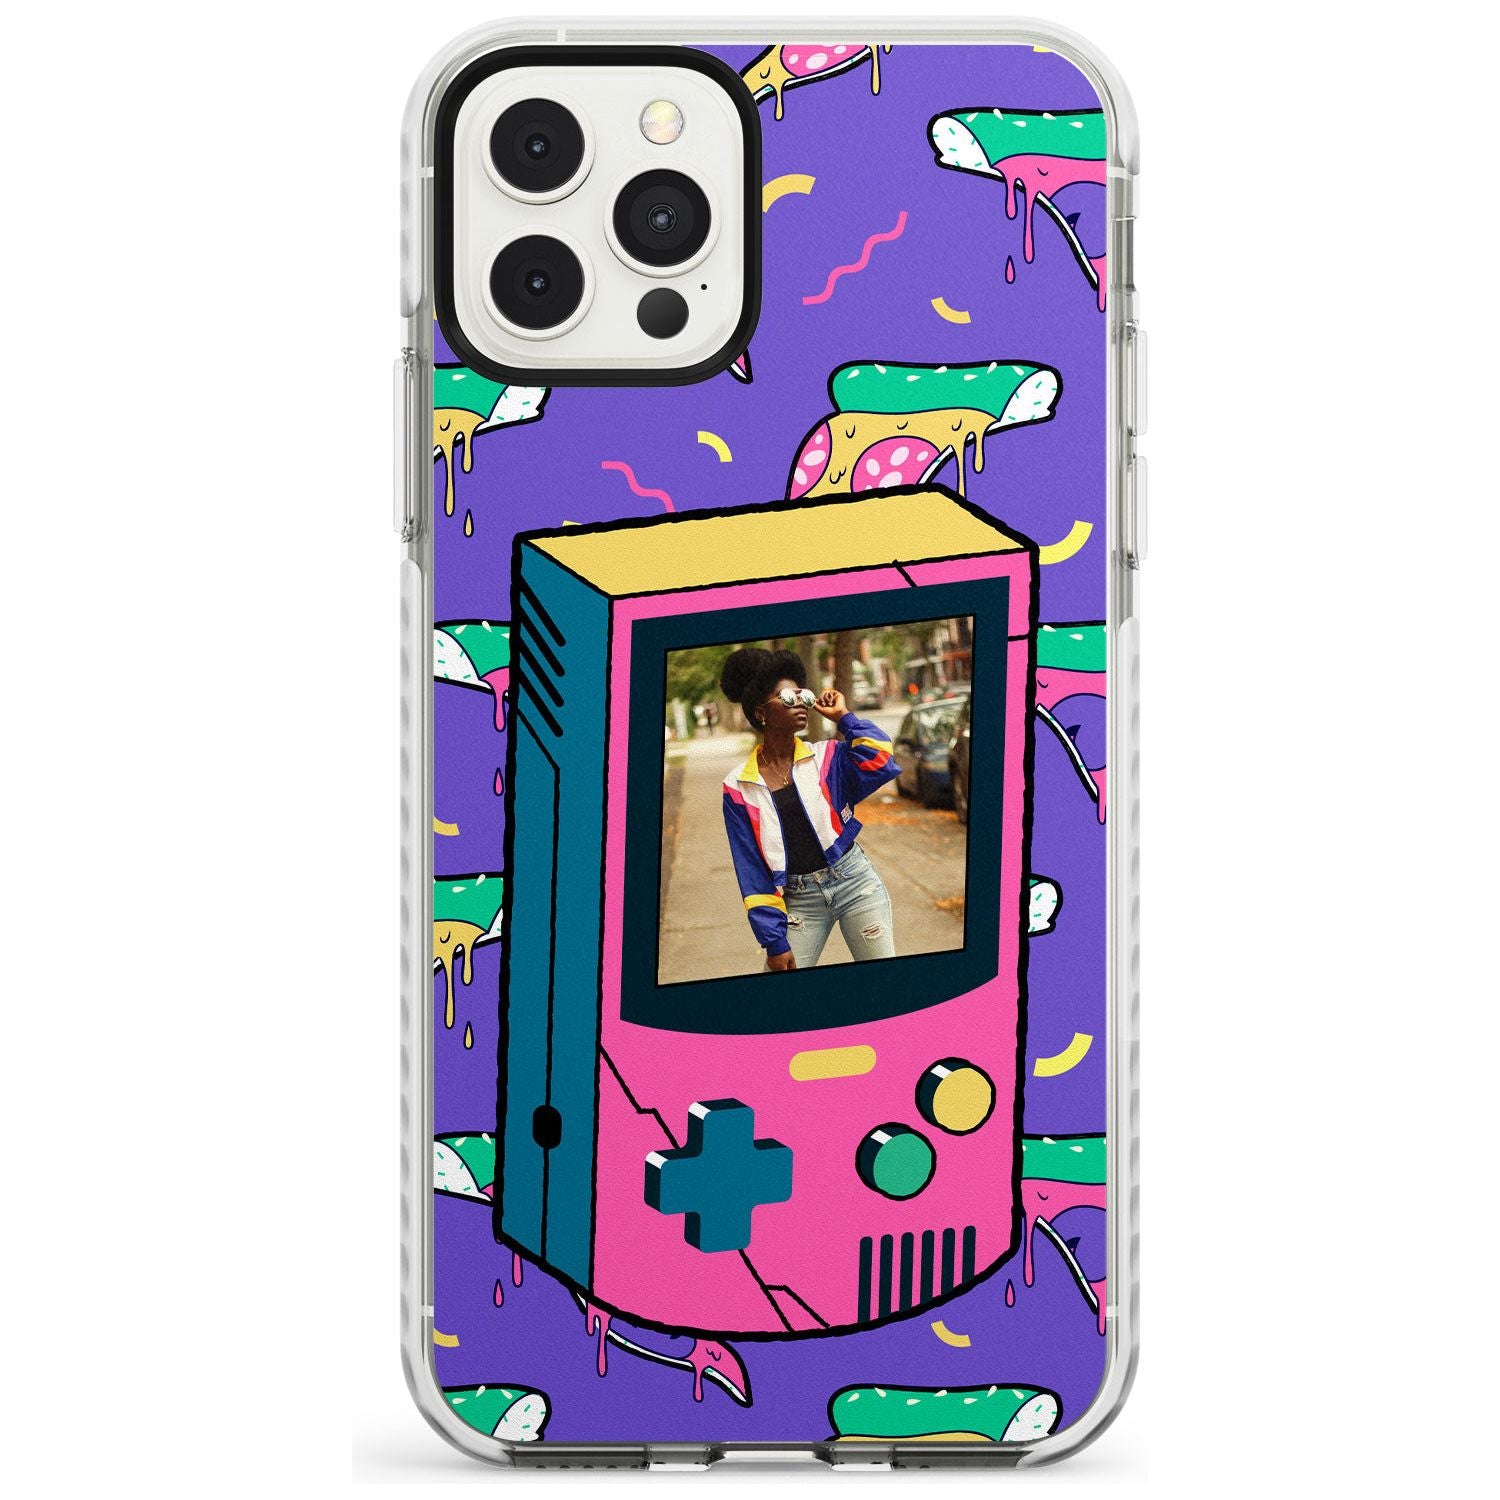 Personalised Retro Game Photo Case Impact Phone Case for iPhone 11 Pro Max